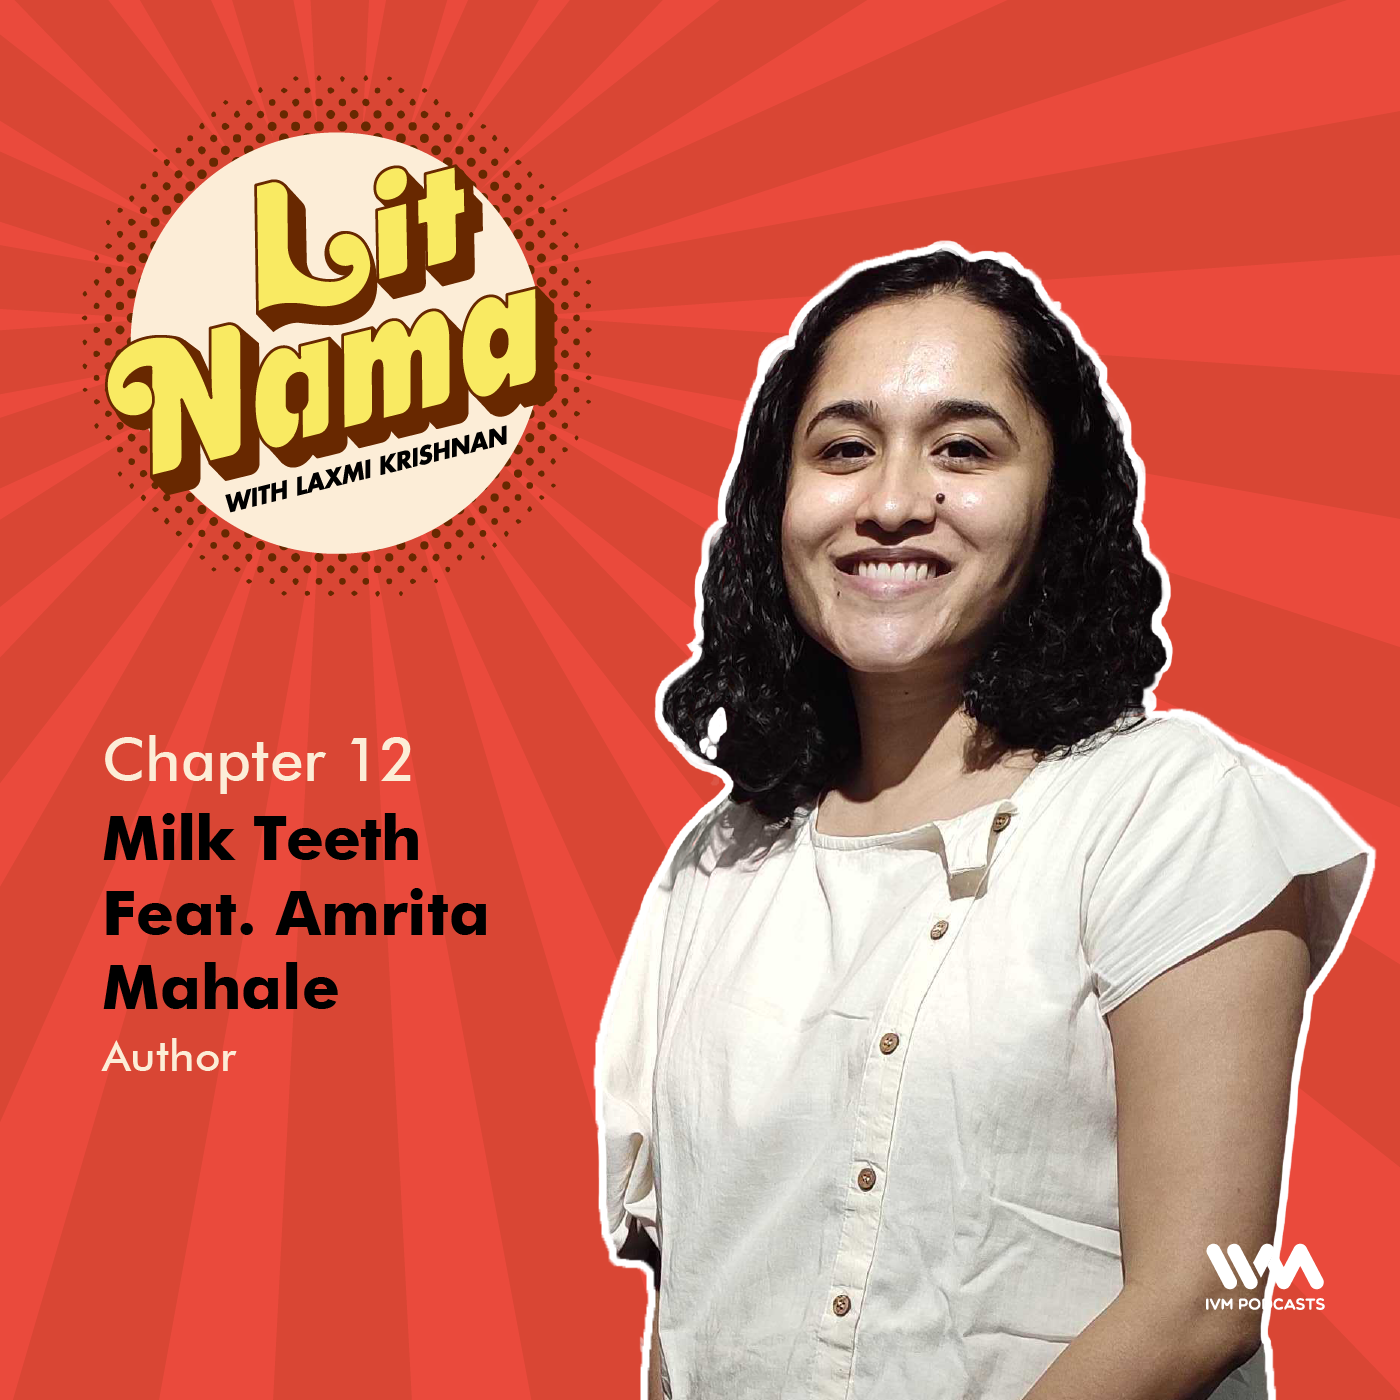 Chapter. 12: Milk Teeth with Amrita Mahale